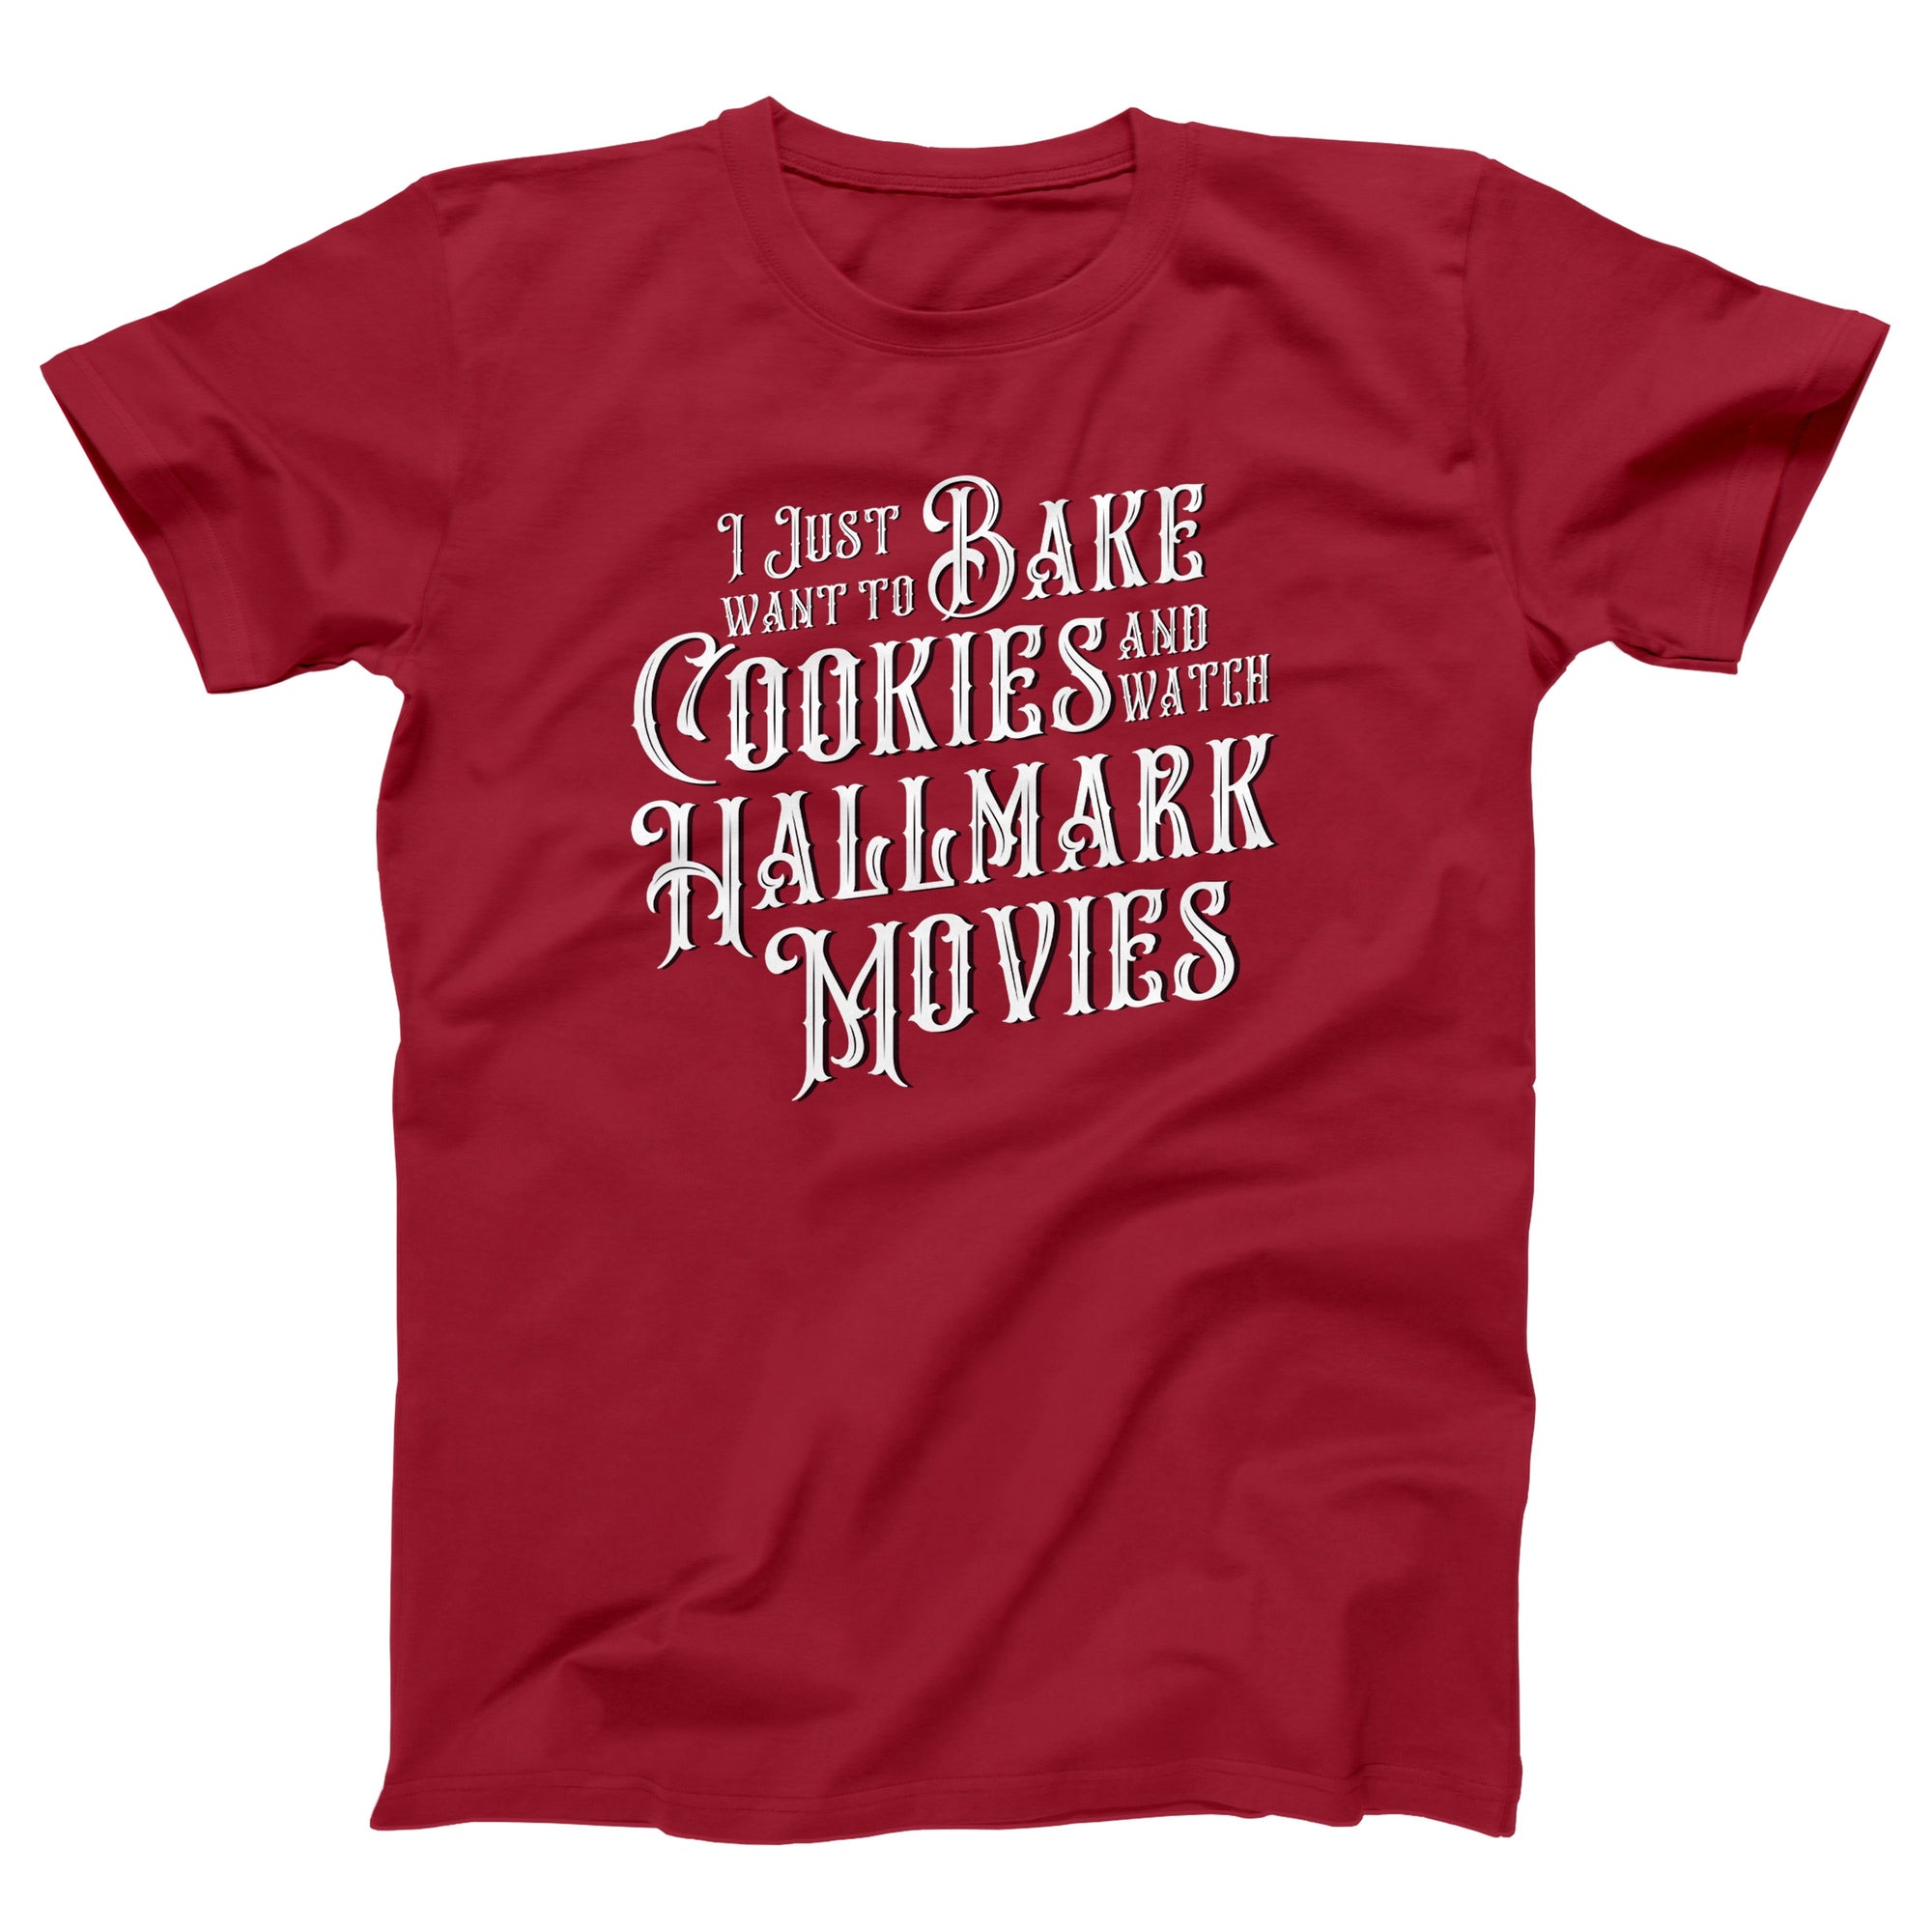 Bake Cookies & Watch Hallmark Movies Adult Unisex T-Shirt - anishphilip